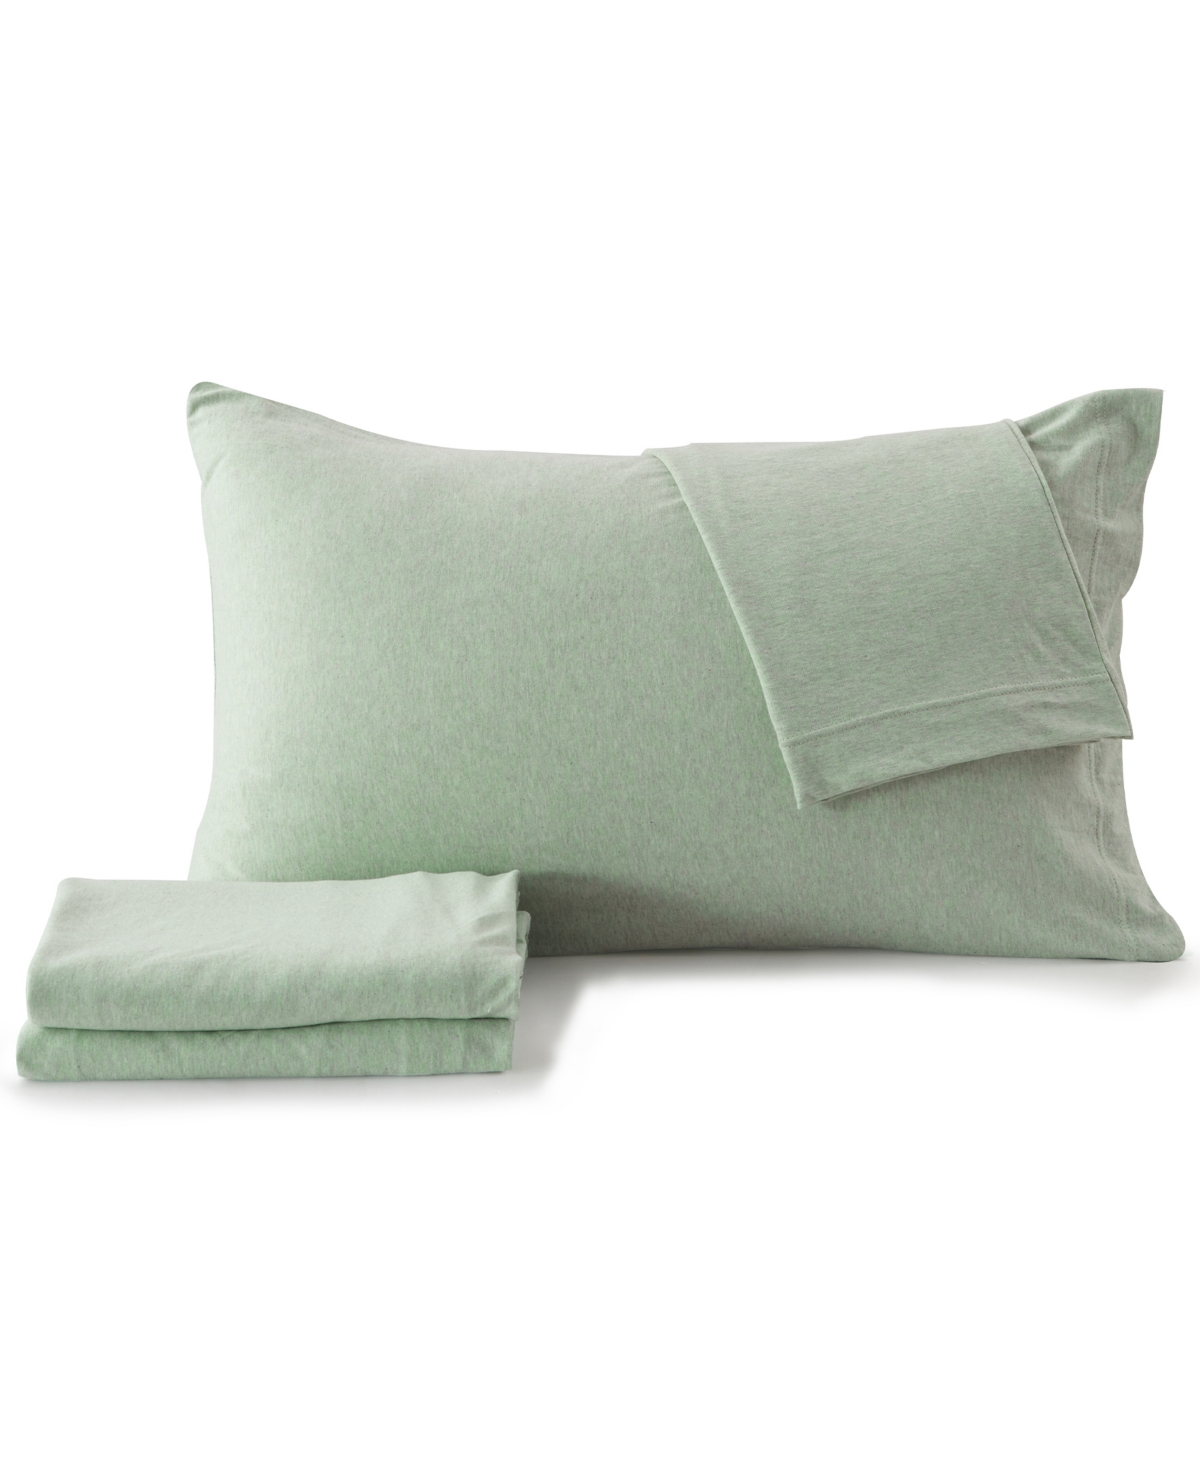 Premium Comforts Heathered Melange T-shirt Jersey Knit Cotton Blend 4 Piece Sheet Set, Queen In Green